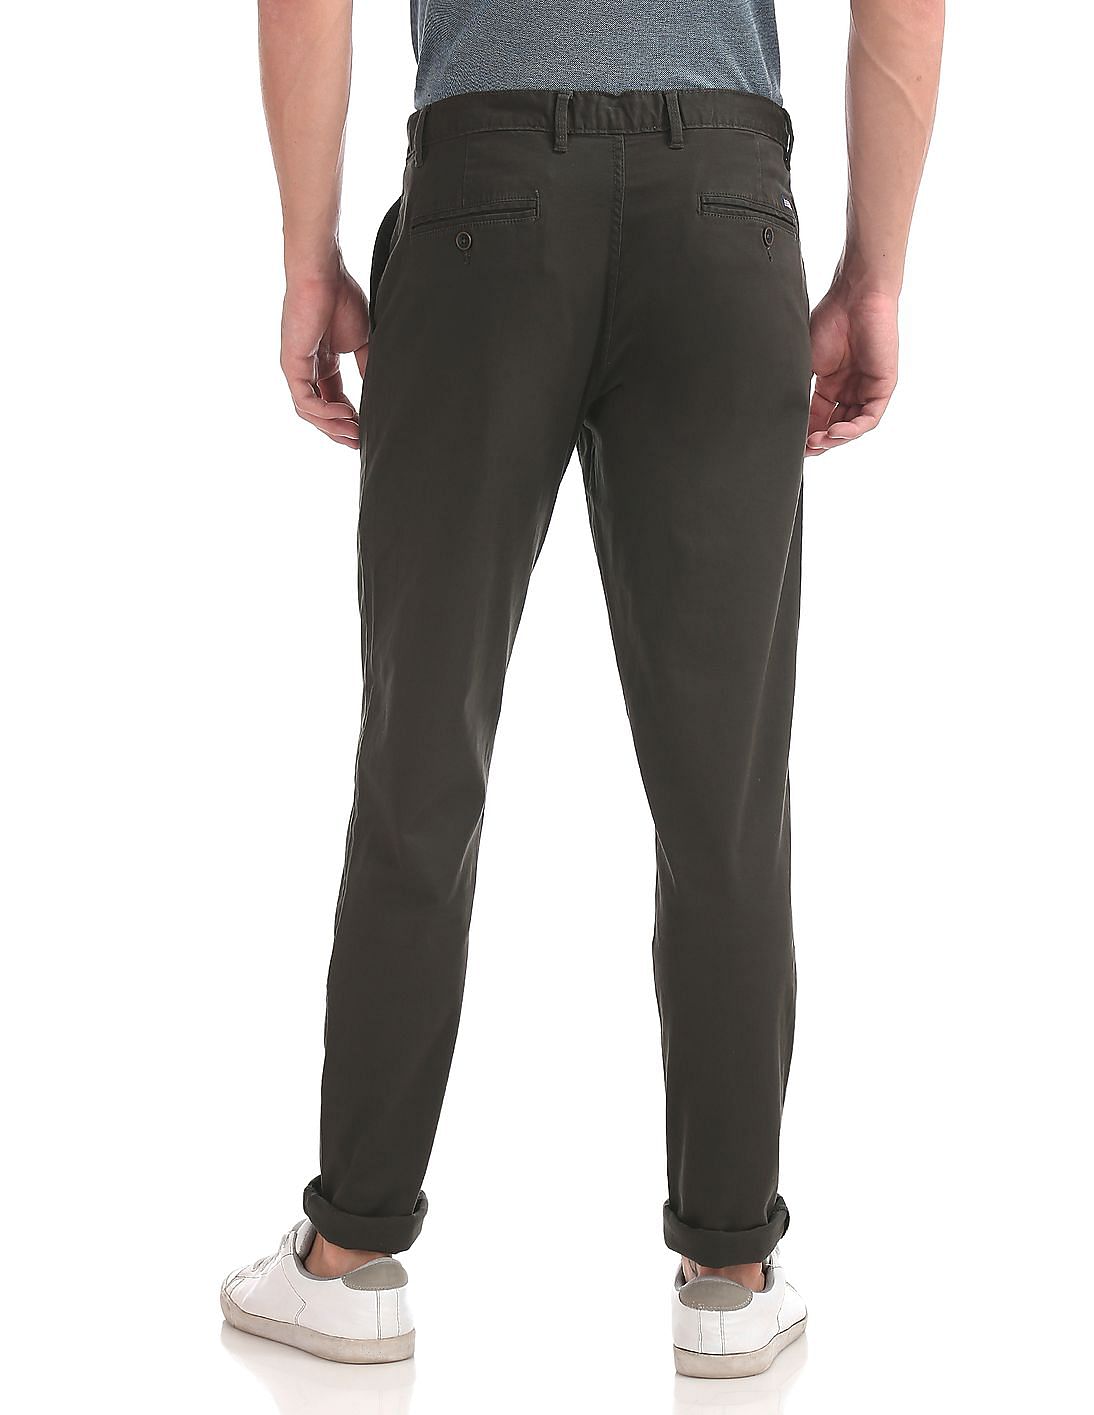 Buy Navy Trousers  Pants for Men by ARROW Online  Ajiocom